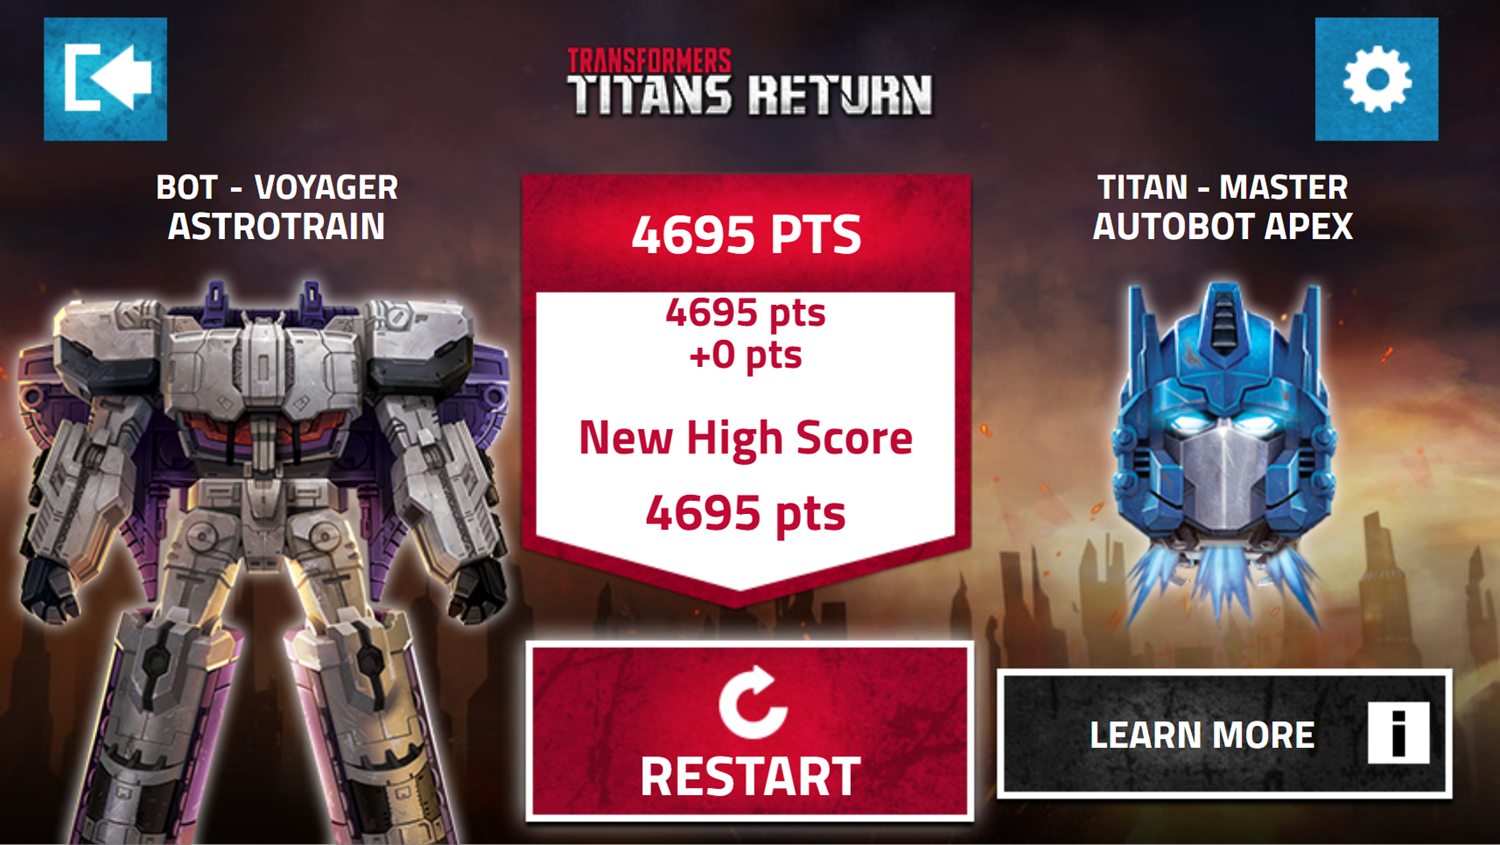 Transformers Titans Return Game Over Screenshot.